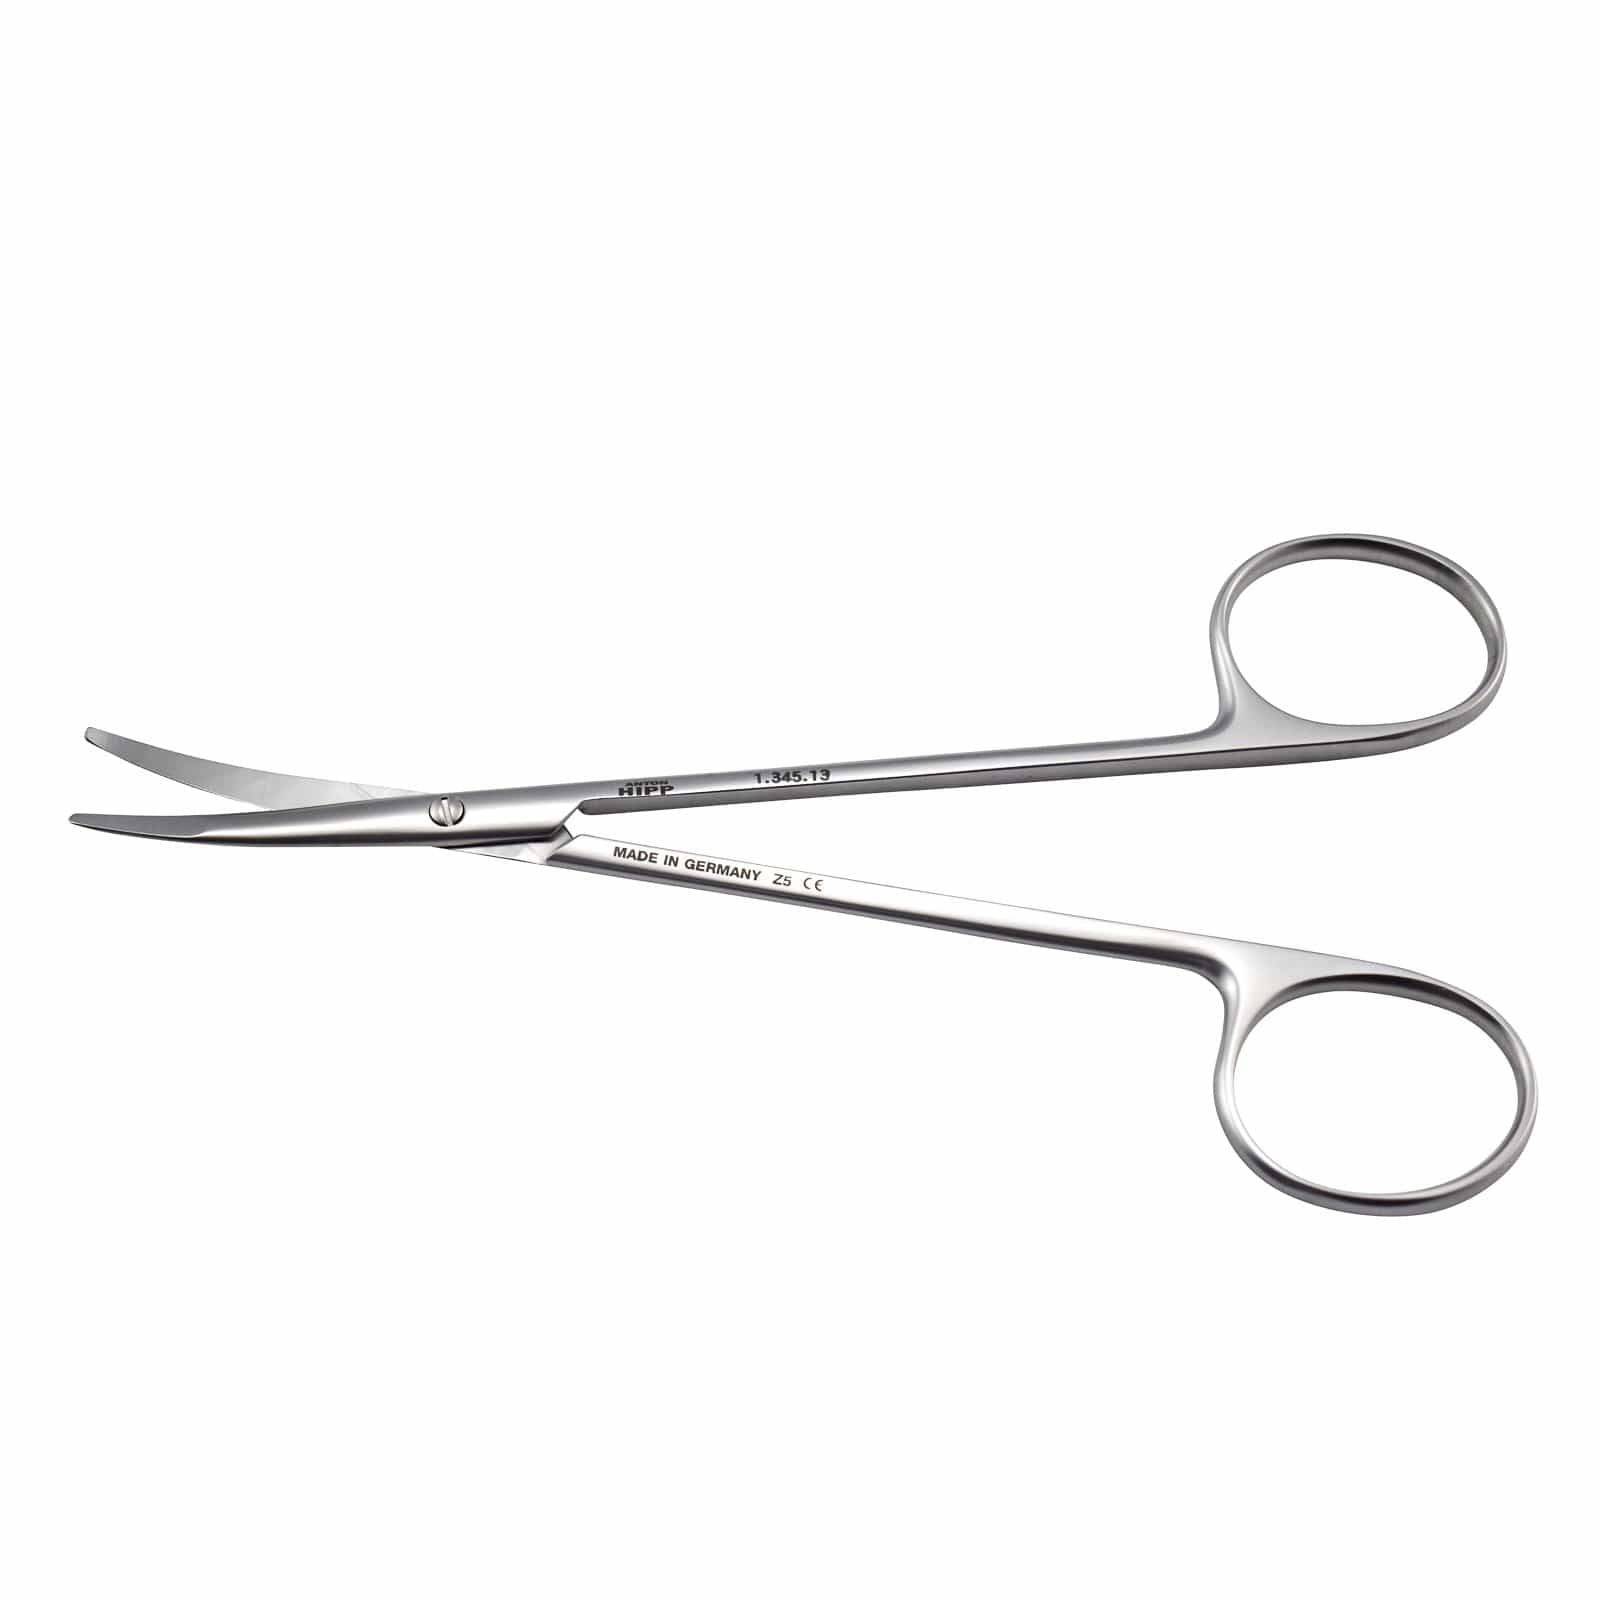 Hipp Surgical Instruments Curved / Delicate Hipp Kilner Scissors